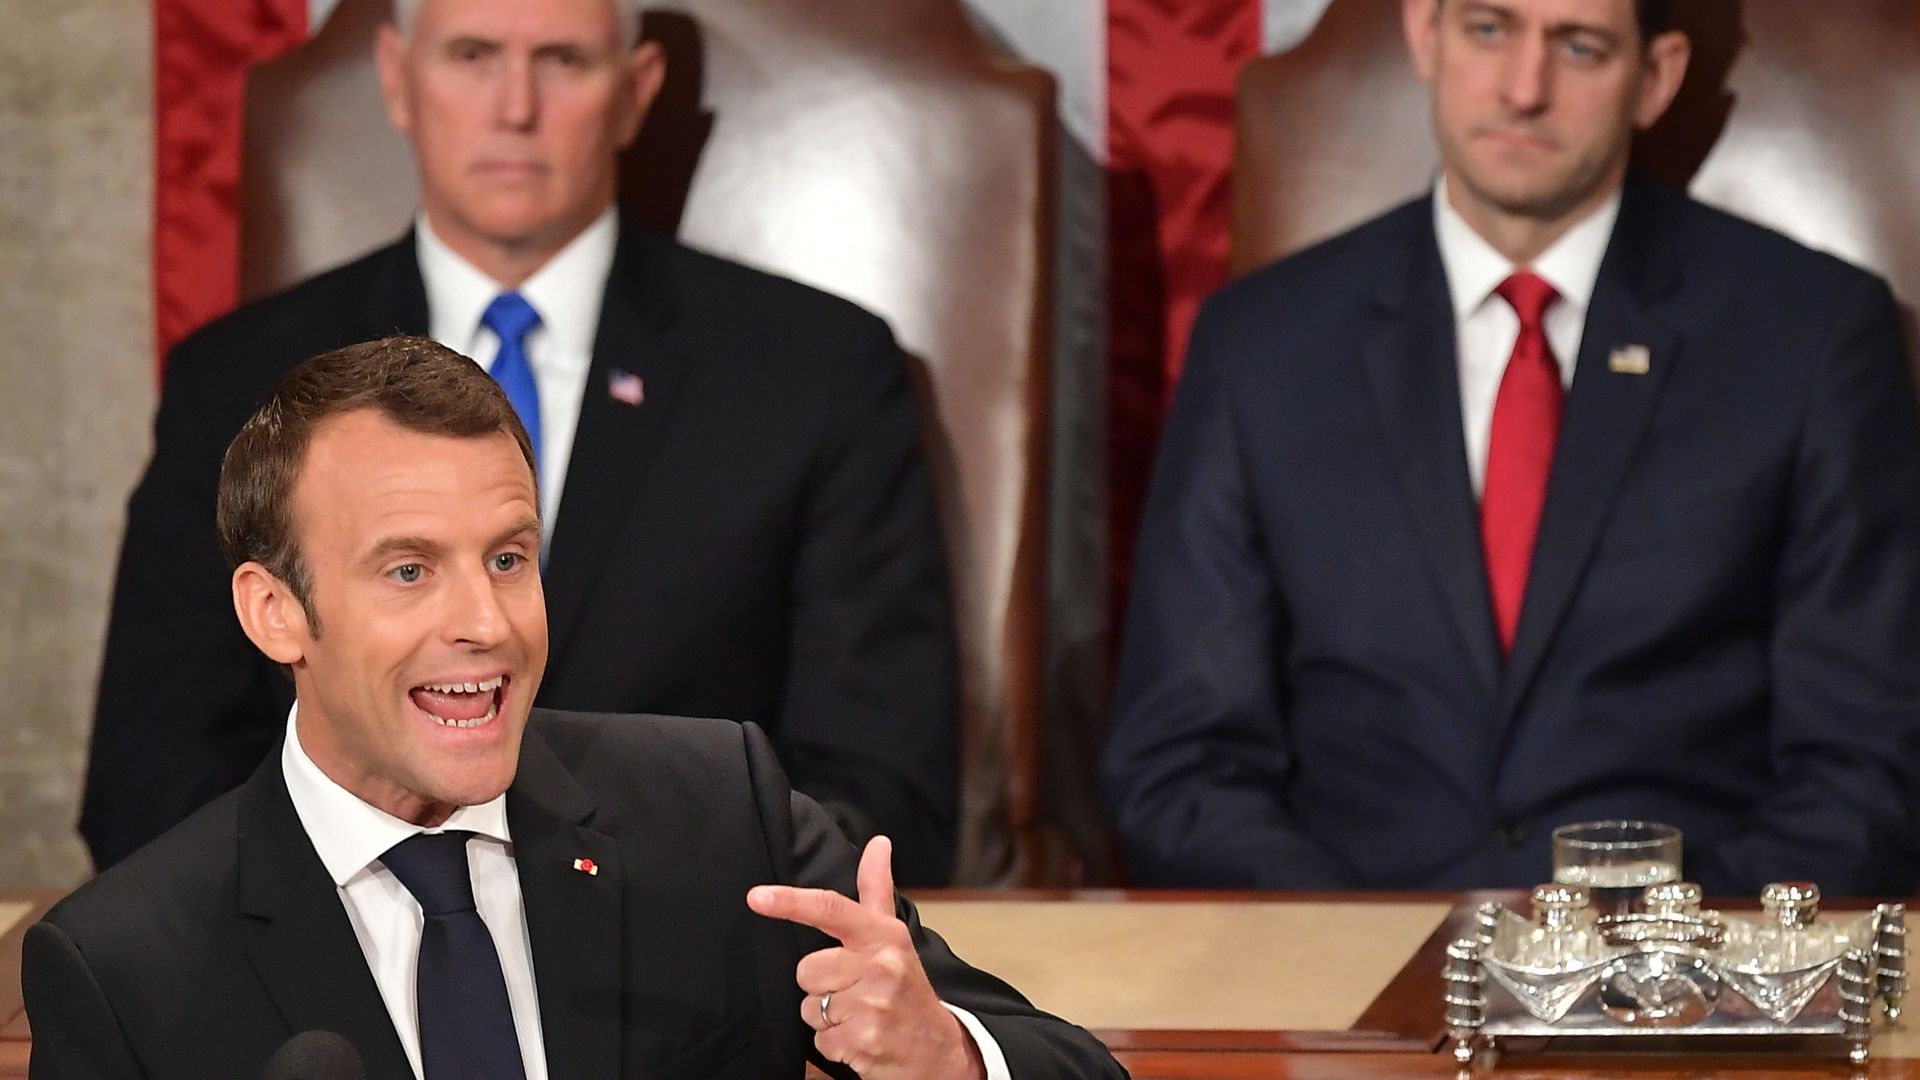 Emmanuel Macron gestures while speaking, with Mike Pence and Paul Ryan sitting behind him.